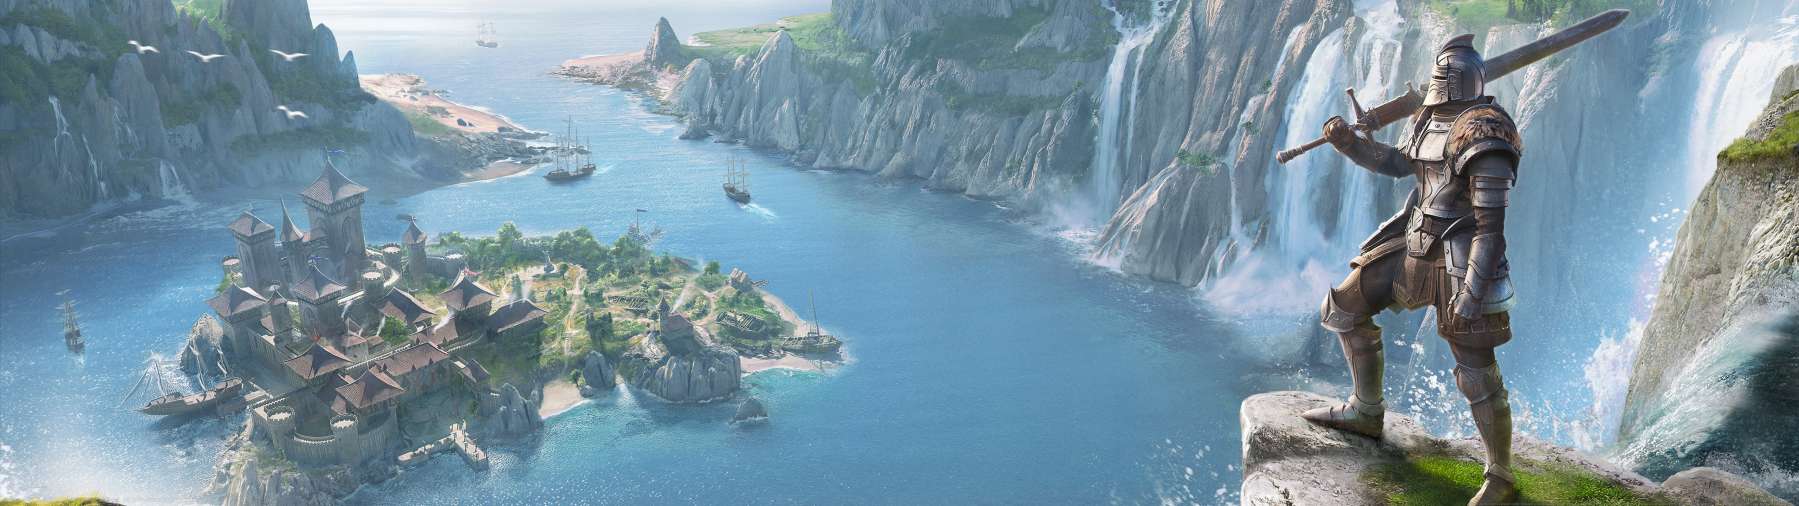 The Elder Scrolls Online: High Isle superwide wallpaper or background 01